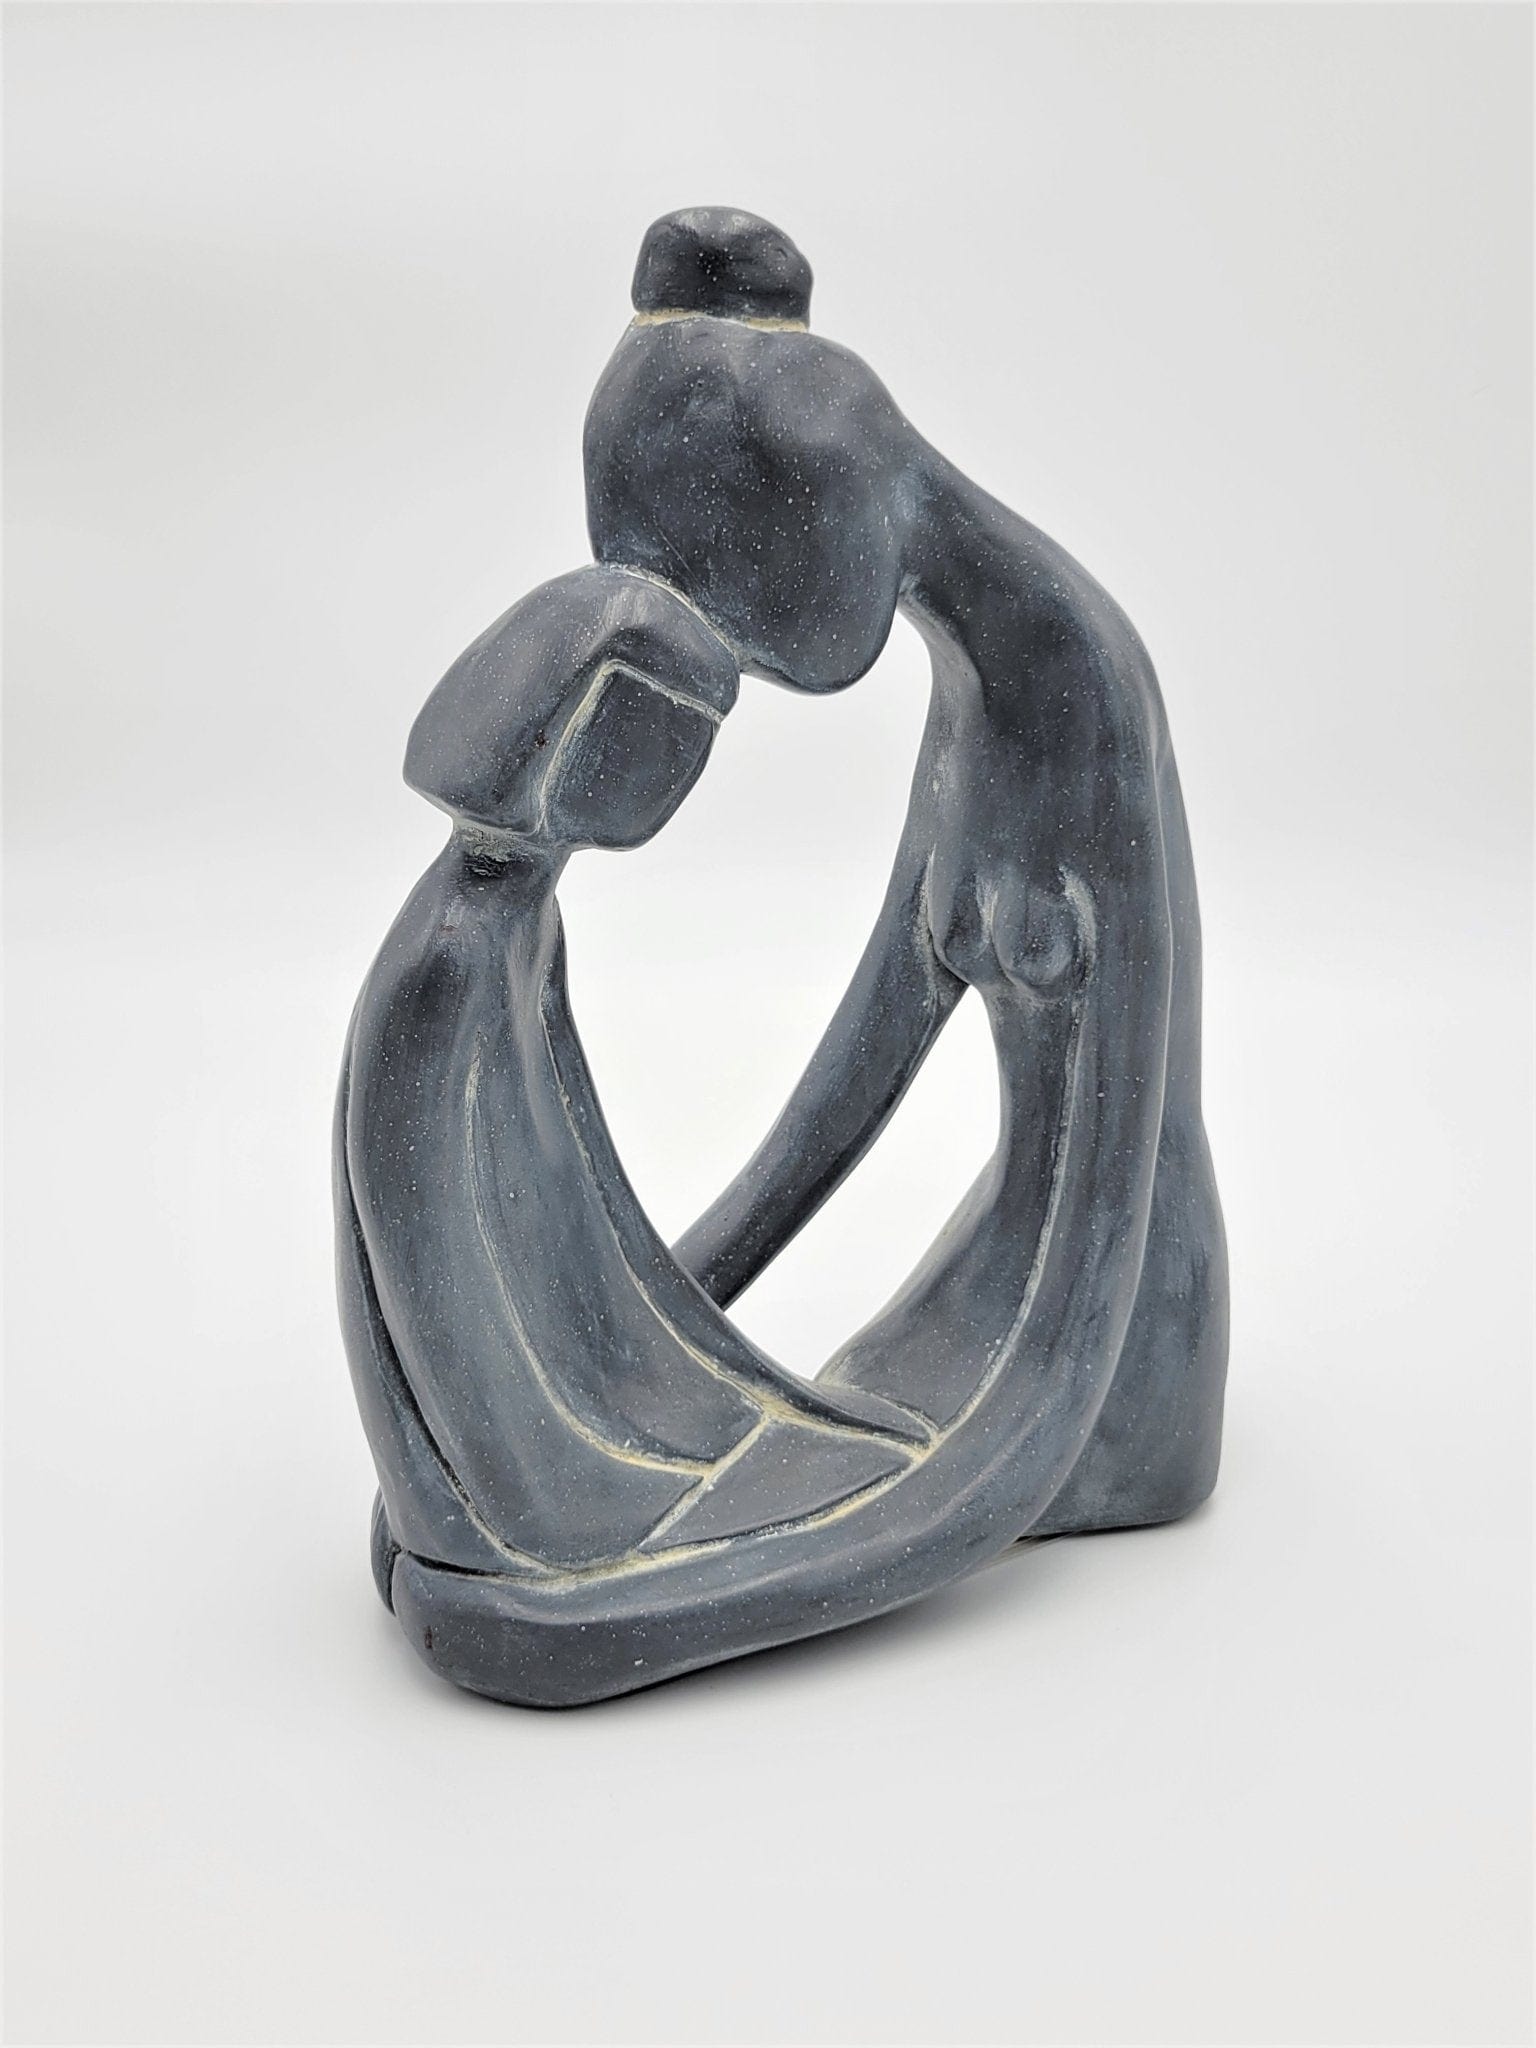 Austin Productions Sculpture Austin Prod Mother Daughter Ceramic Sculpture Titled "Girl Talk" by Klara Sever 1971